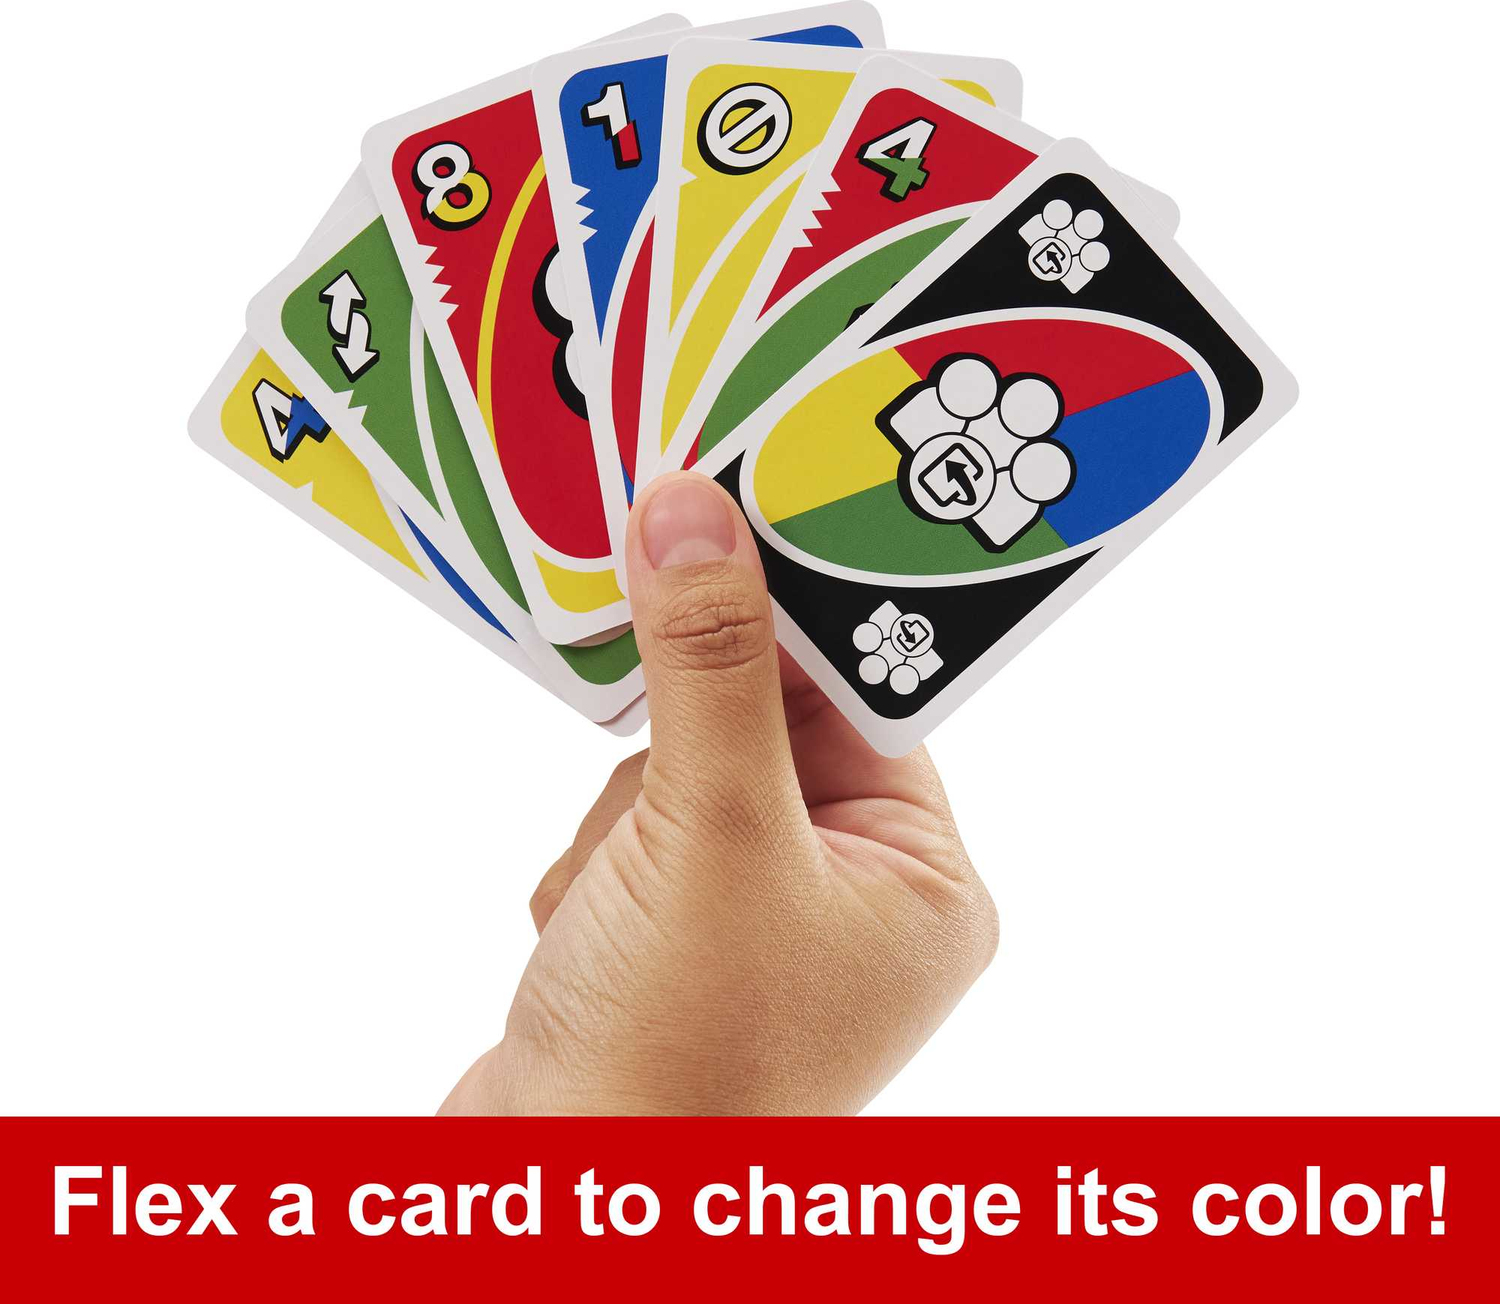 UNO Flex Card Game